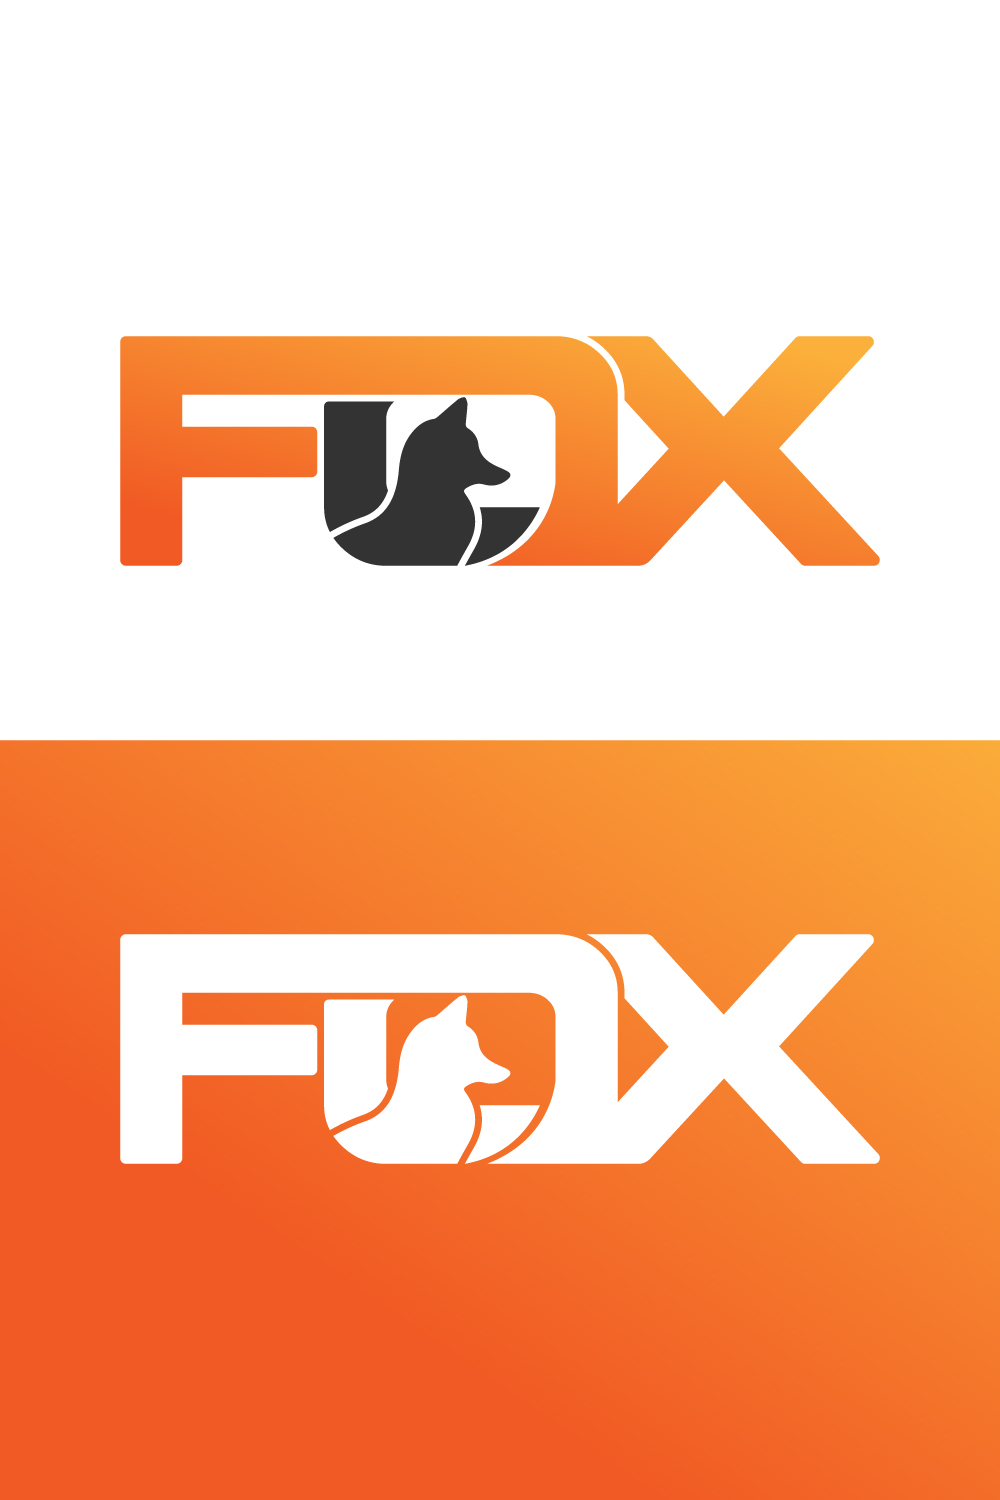 Fox logo design pinterest preview image.